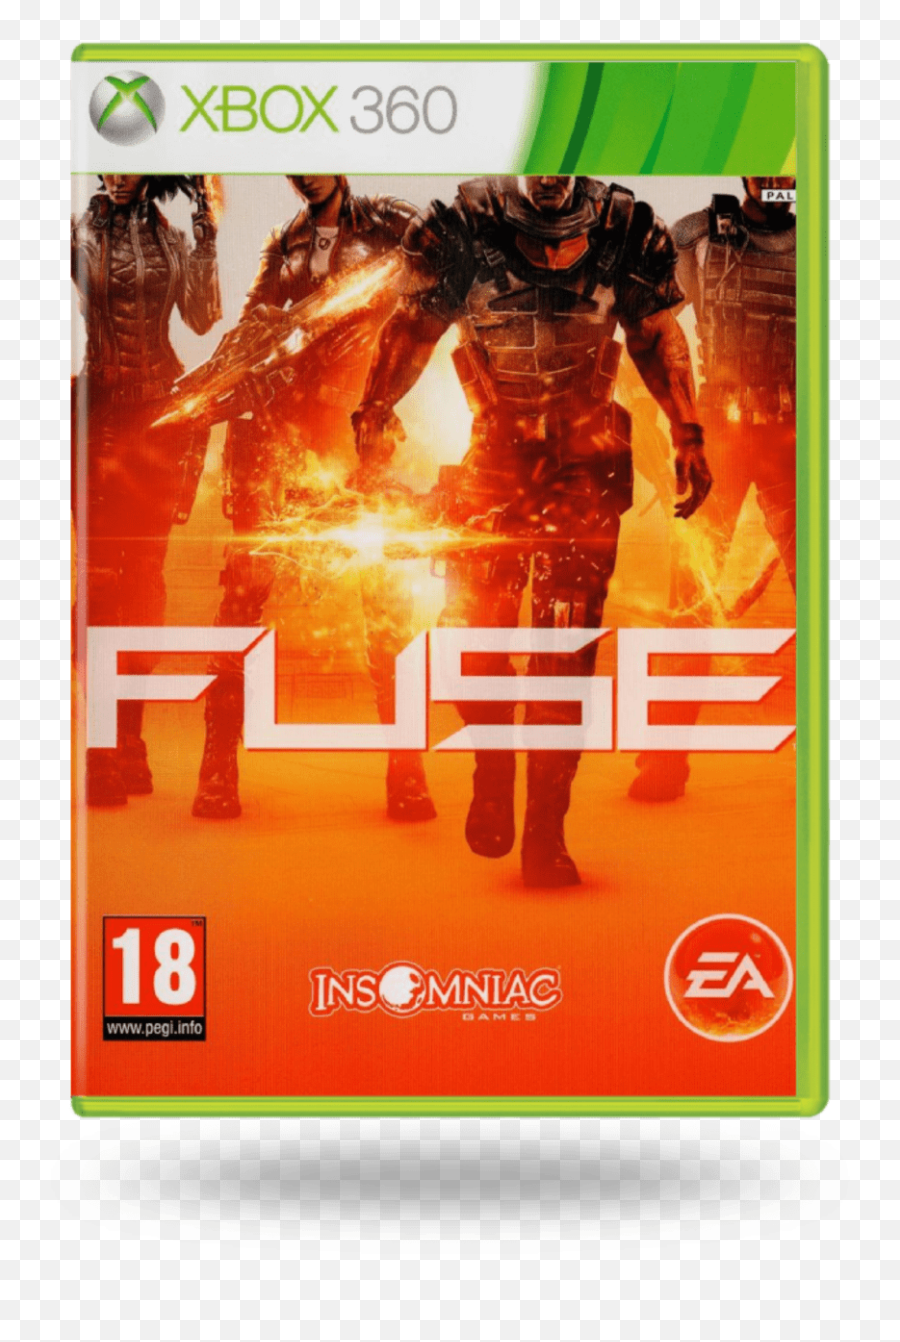 Buy Fuse Xbox 360 Cd Cheap Game Price Eneba Emoji,Insomniac Games Logo